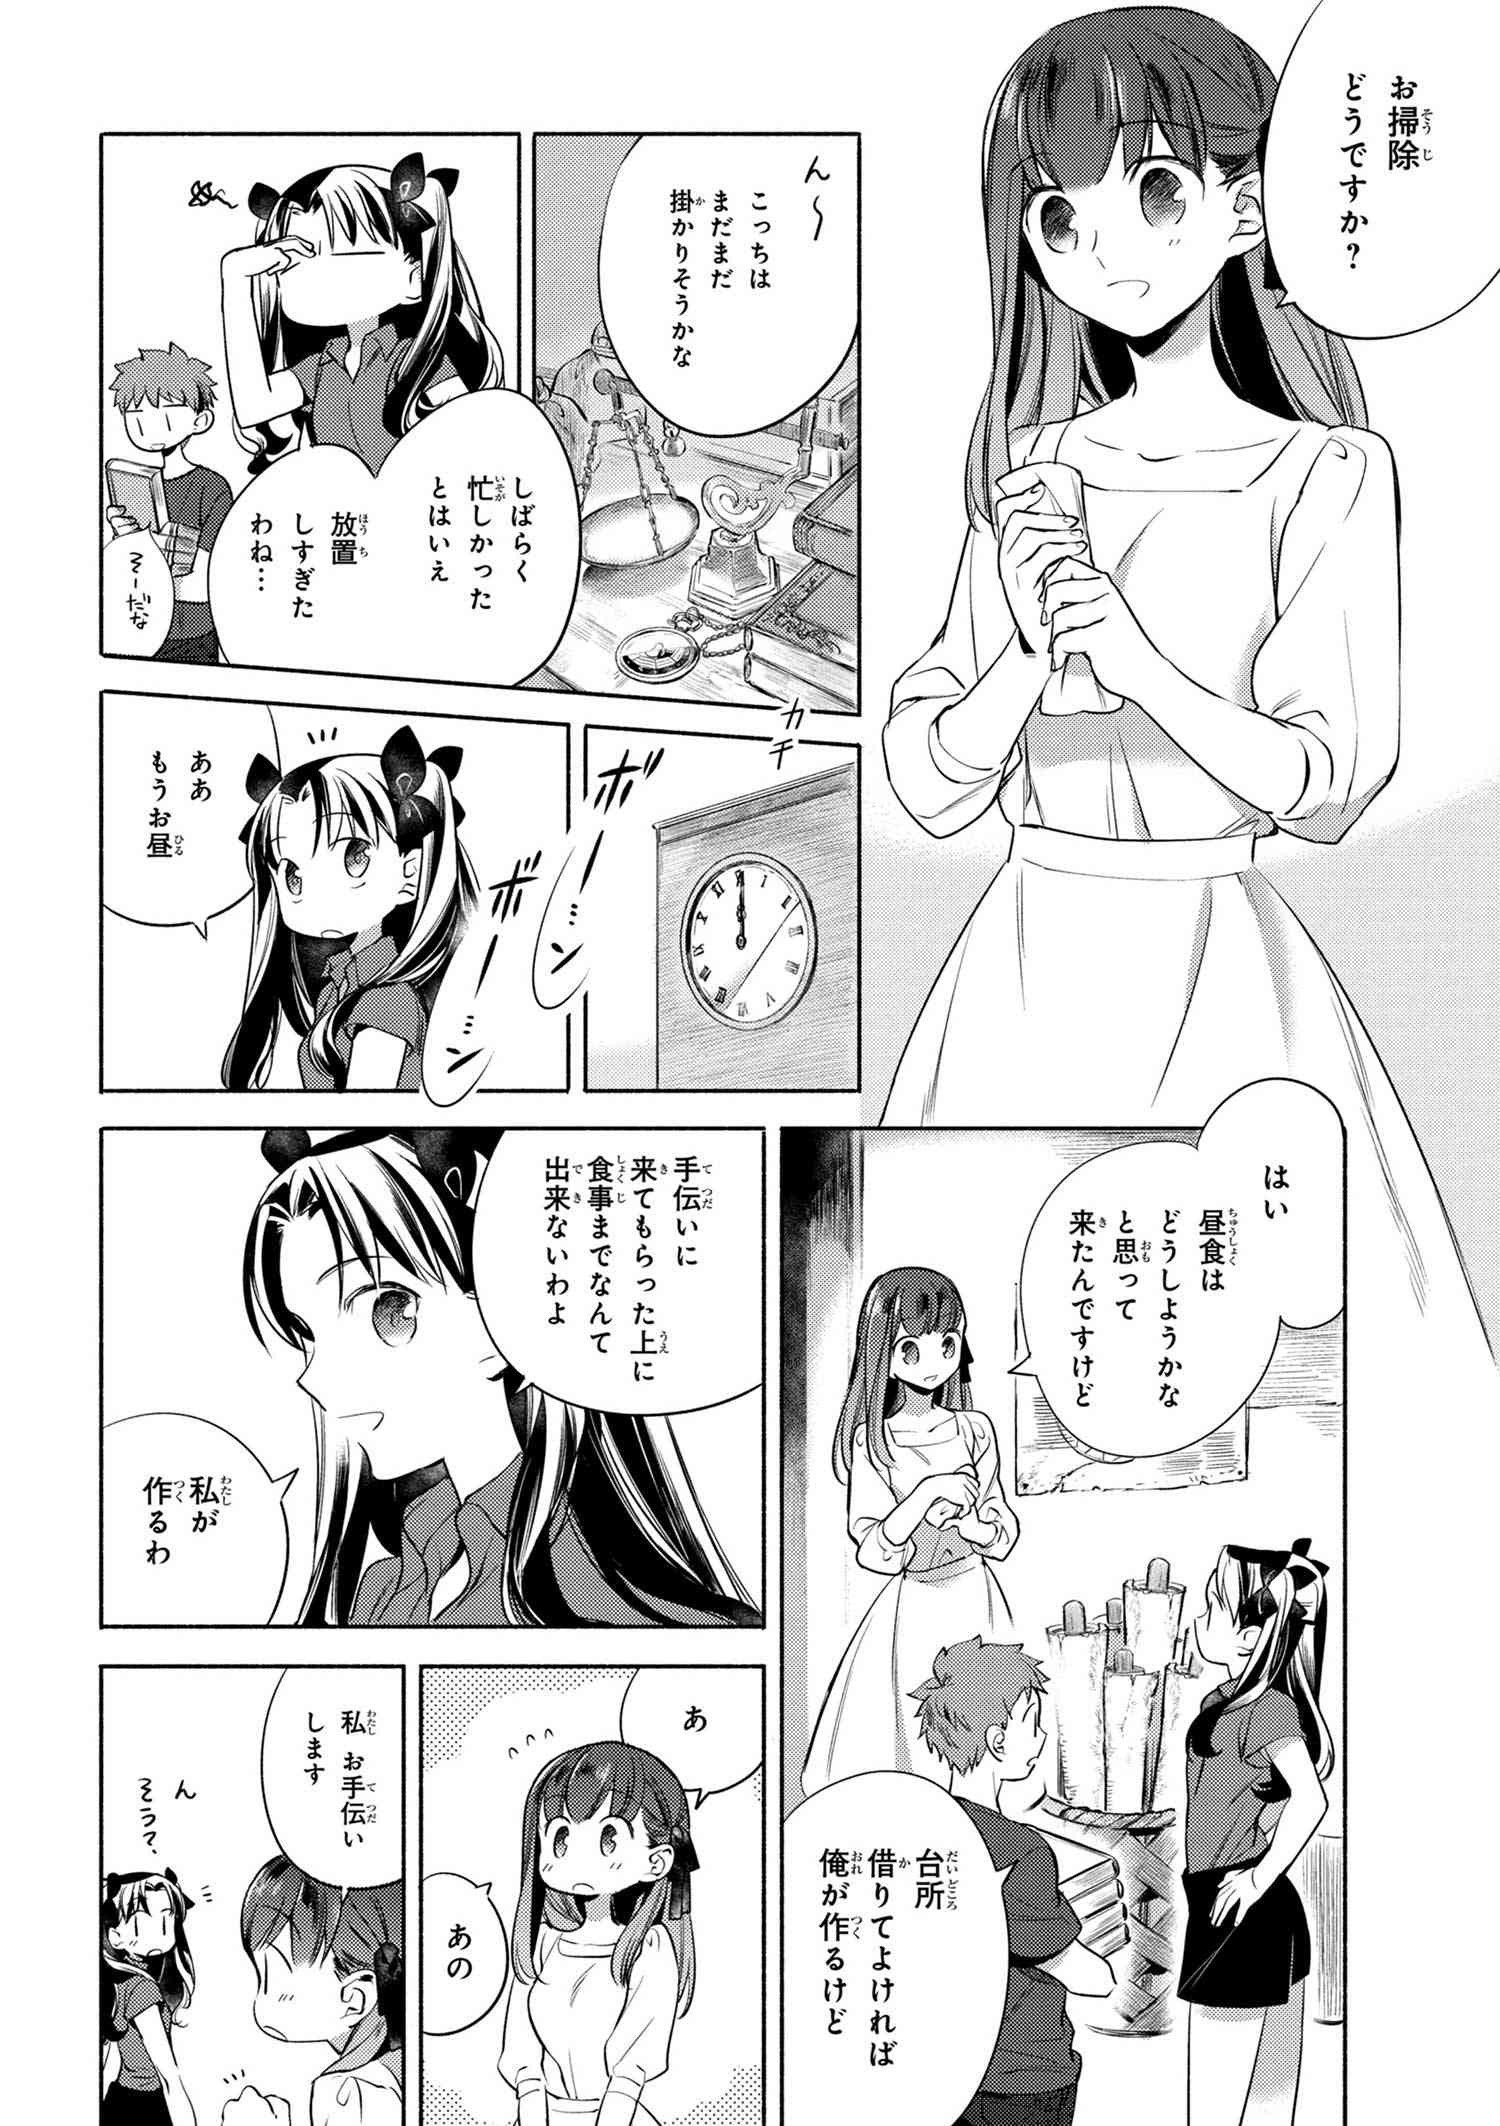 Emiya-san Chi no Kyou no Gohan - Chapter 8 - Page 2